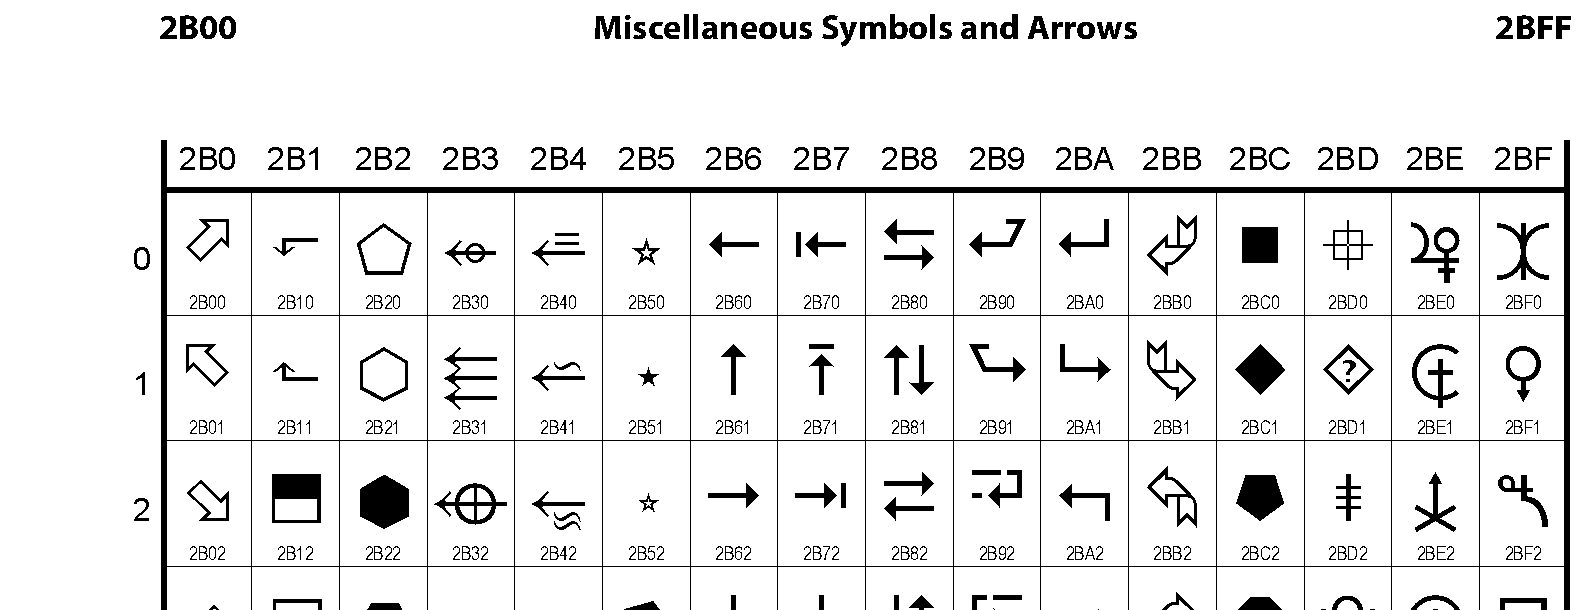 2B00: Miscellaneous Symbols and Arrows